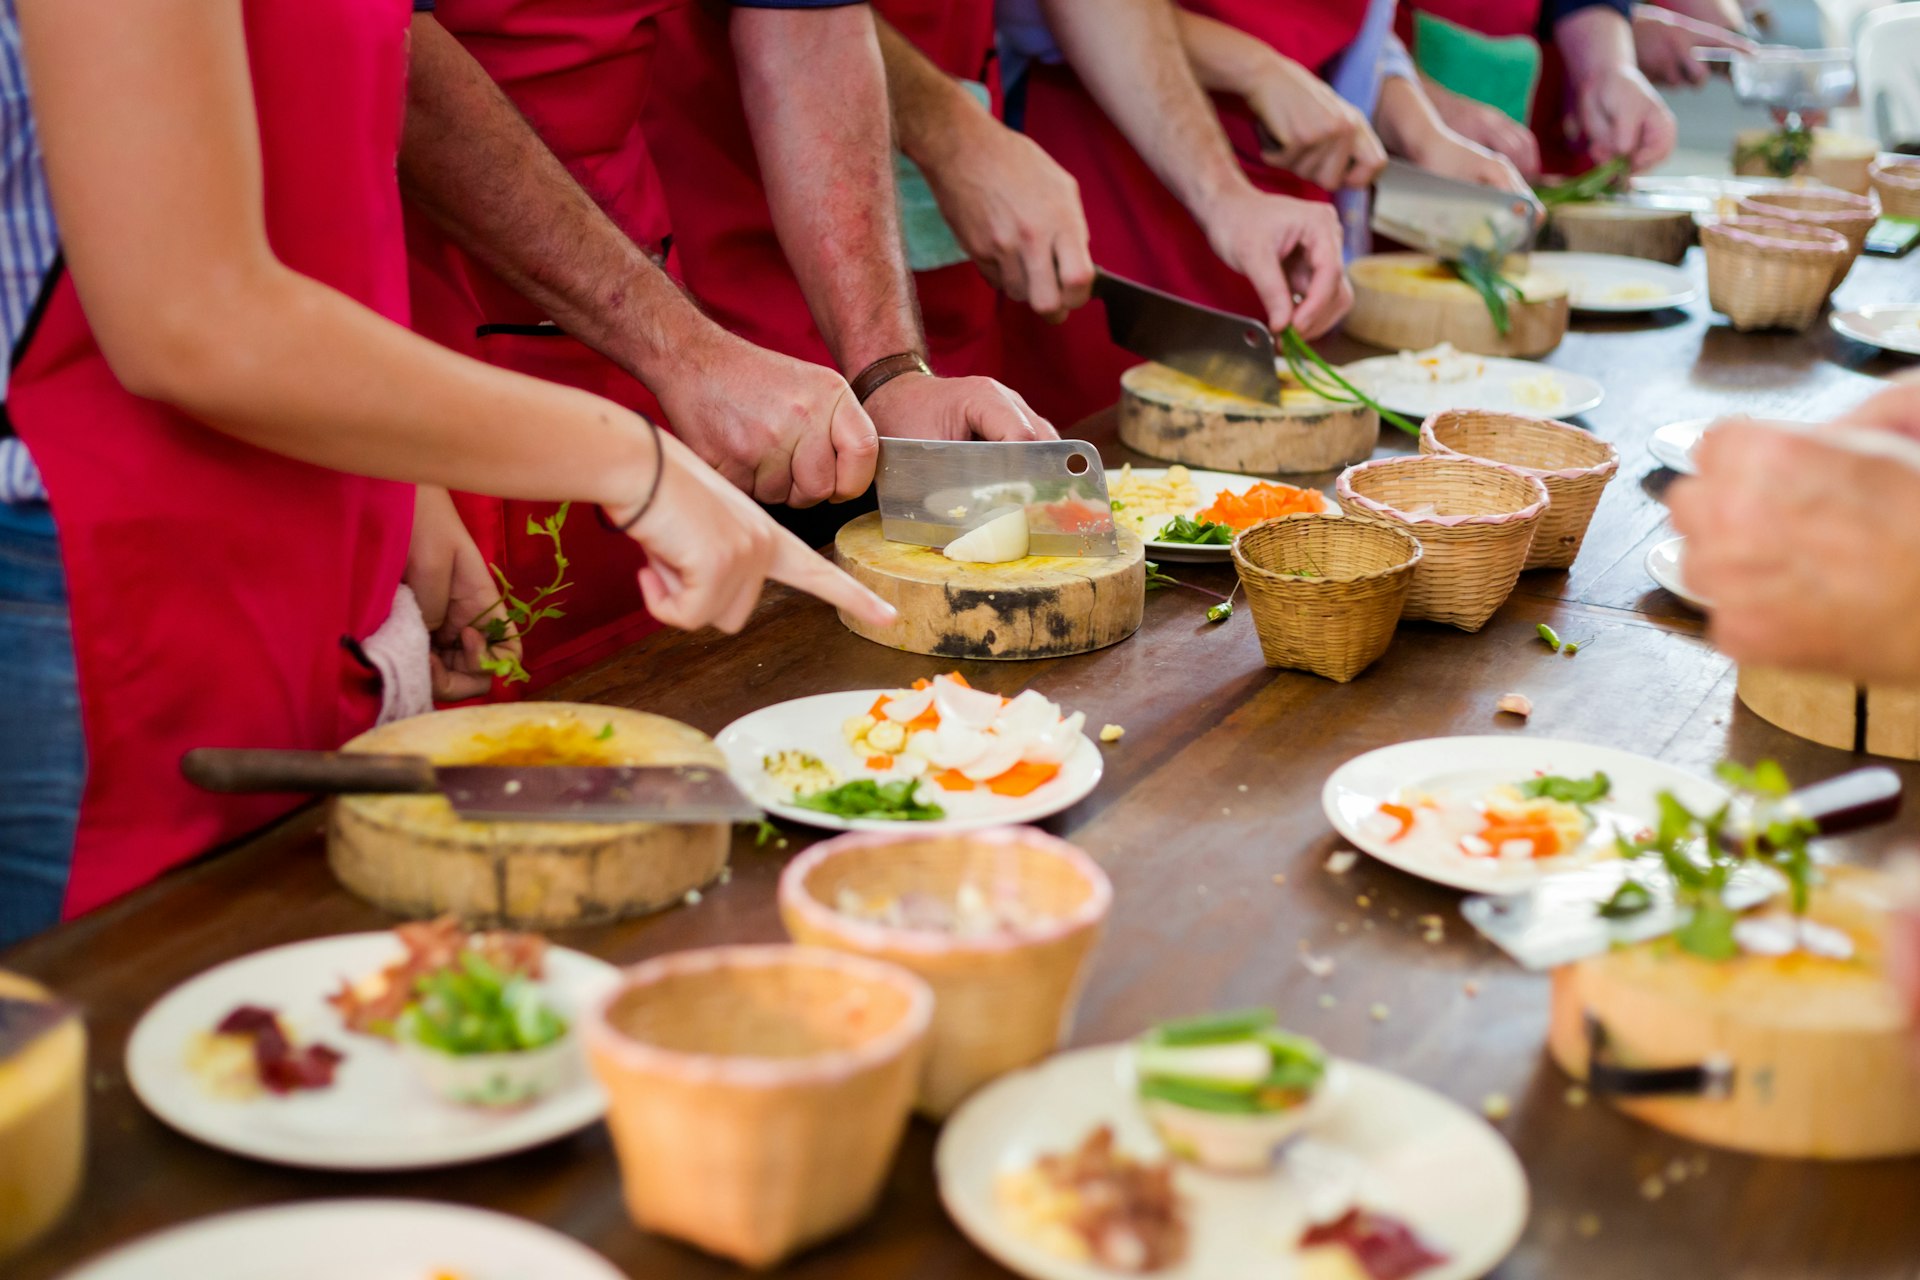 A close-up of hands preparing food at a long table